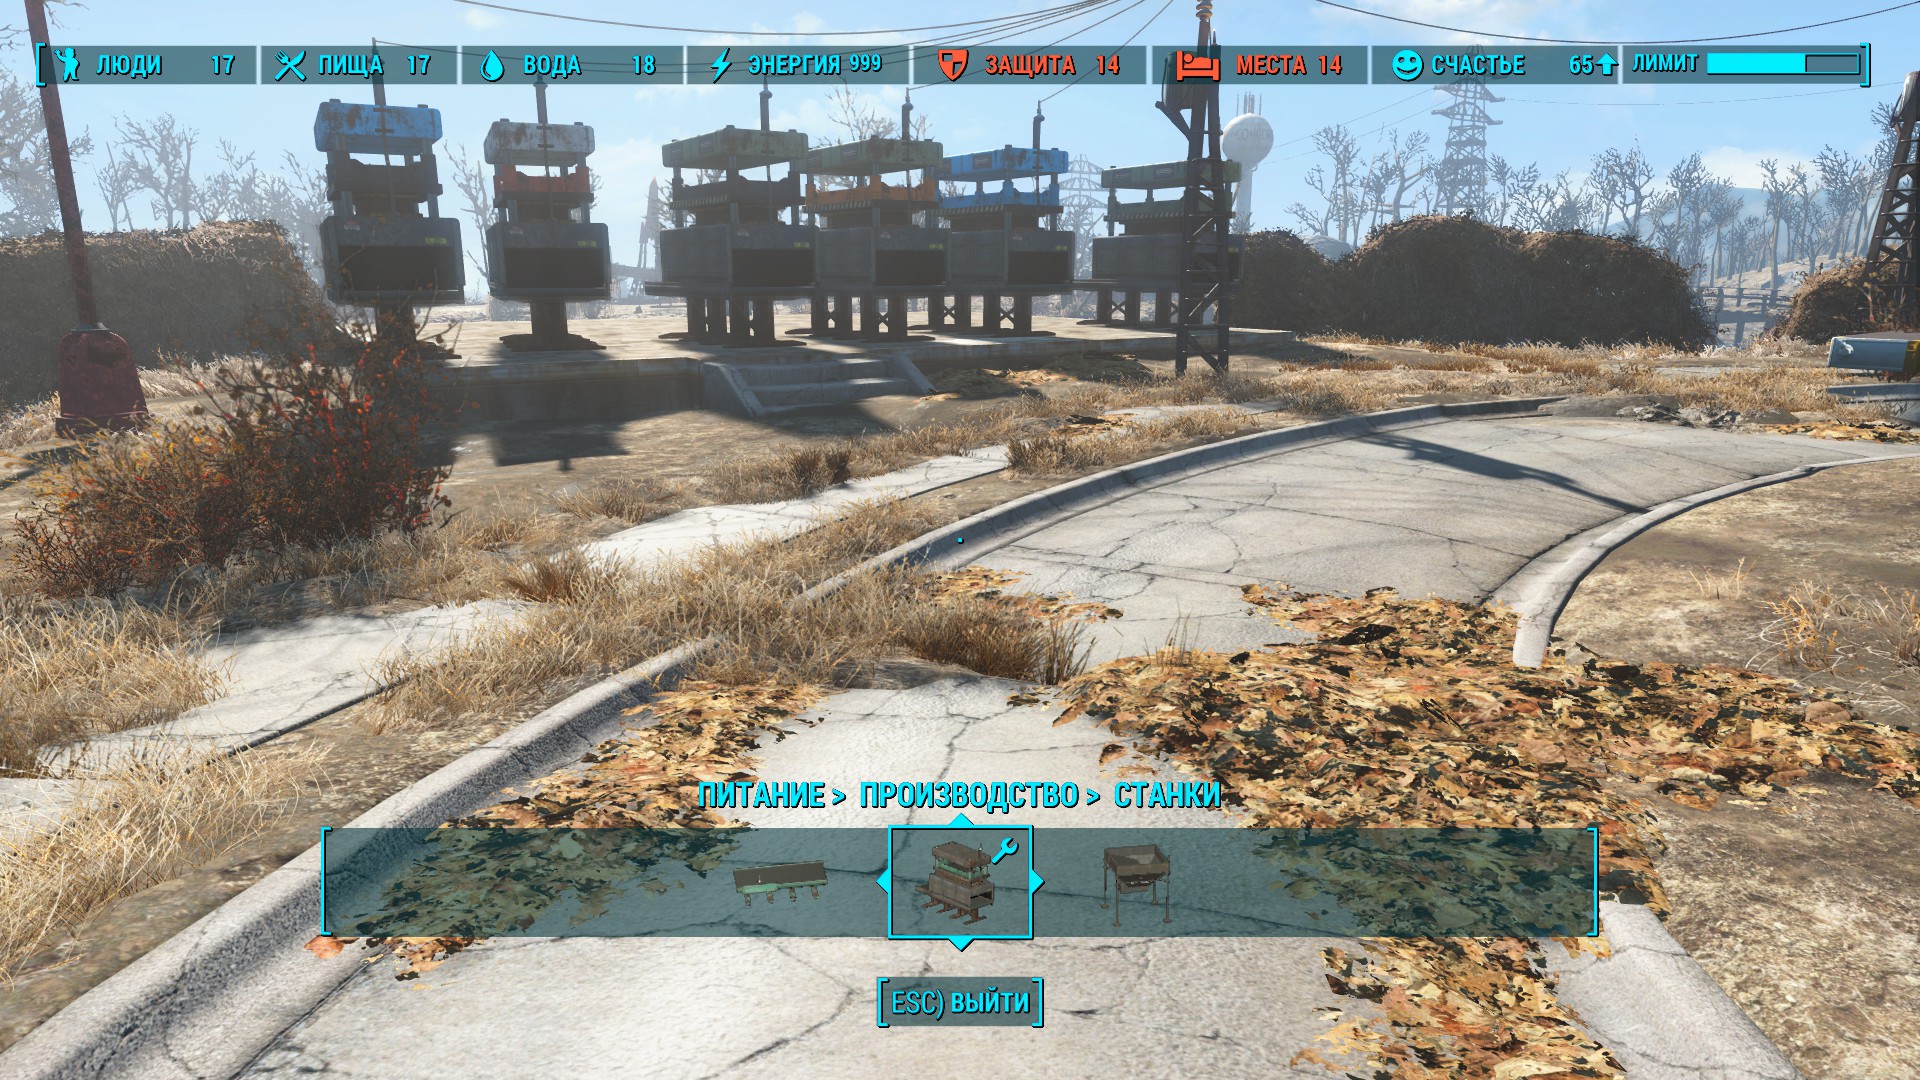 Fallout 4 как работает станок по производству боеприпасов фото 10